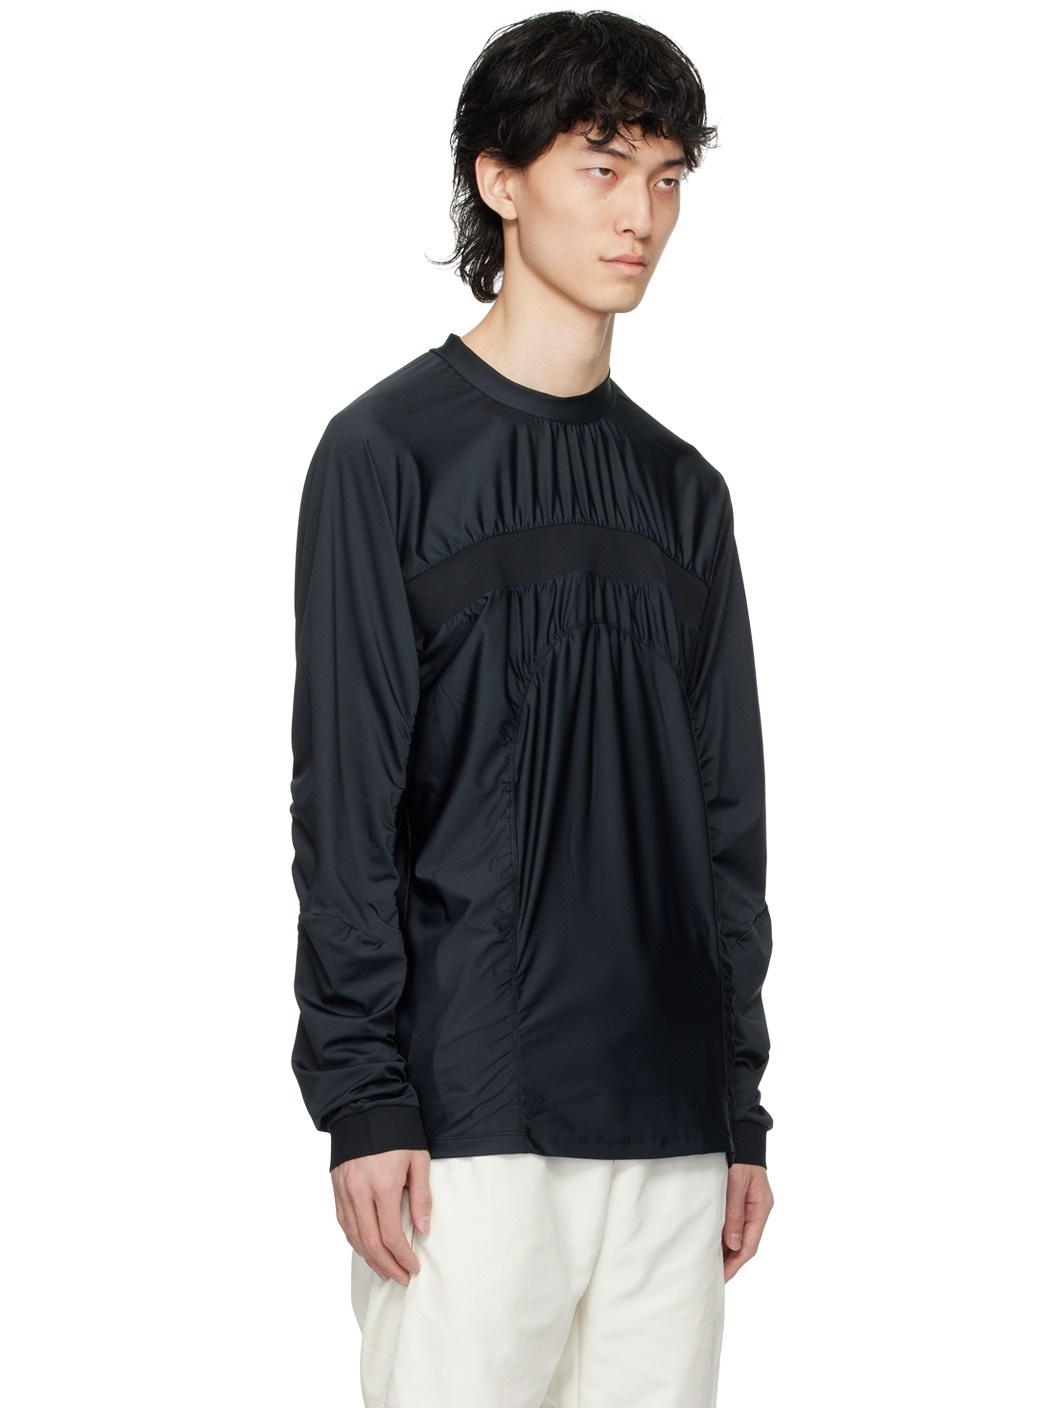 Black Reebok Edition Long Sleeve T-Shirt - 2